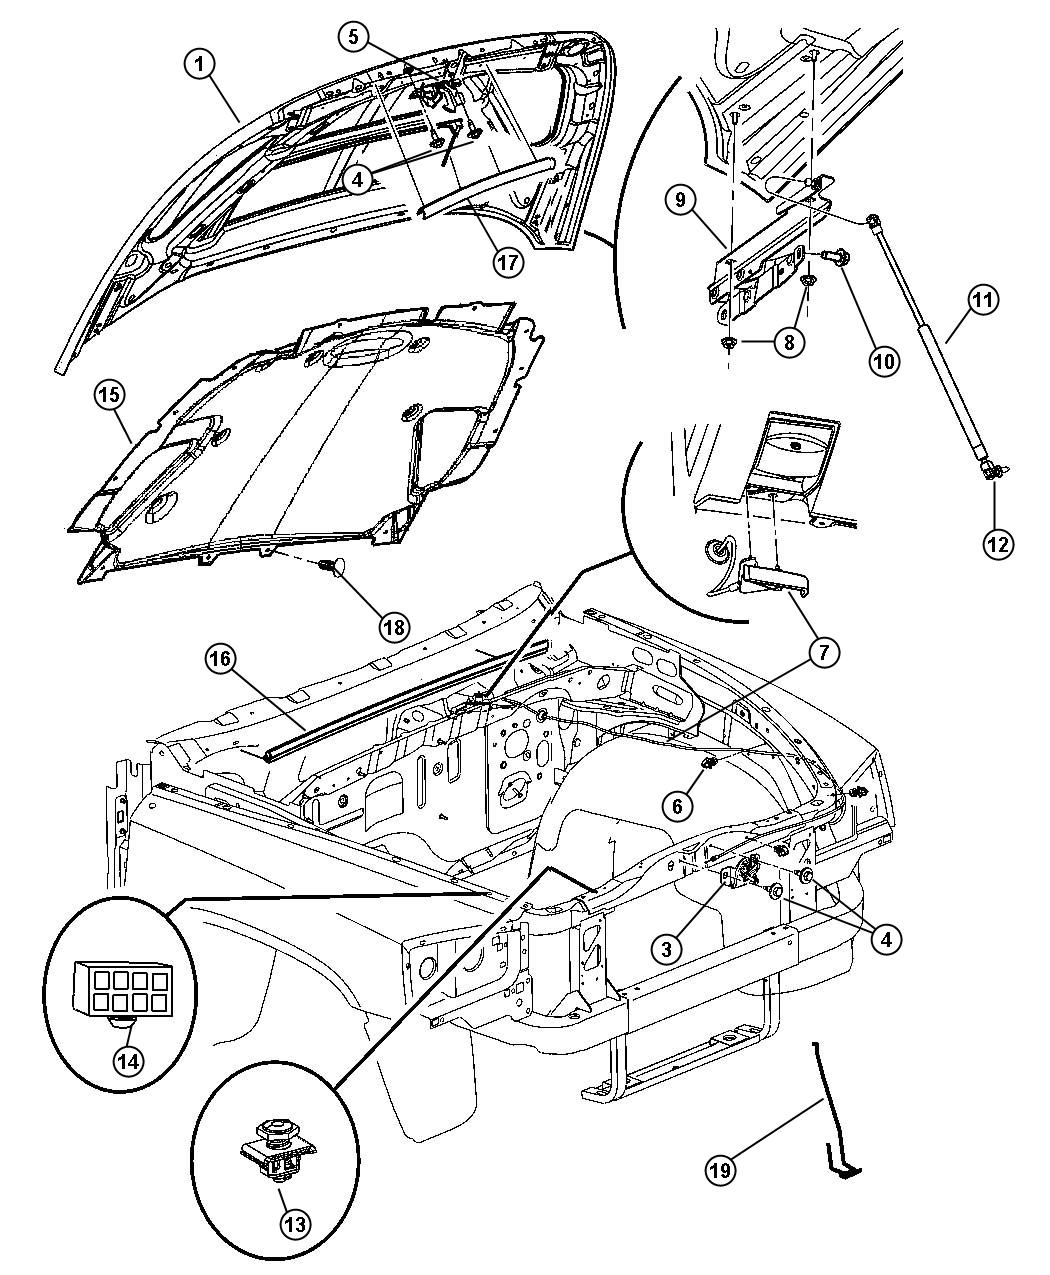 Dodge Dakota Parts Diagram